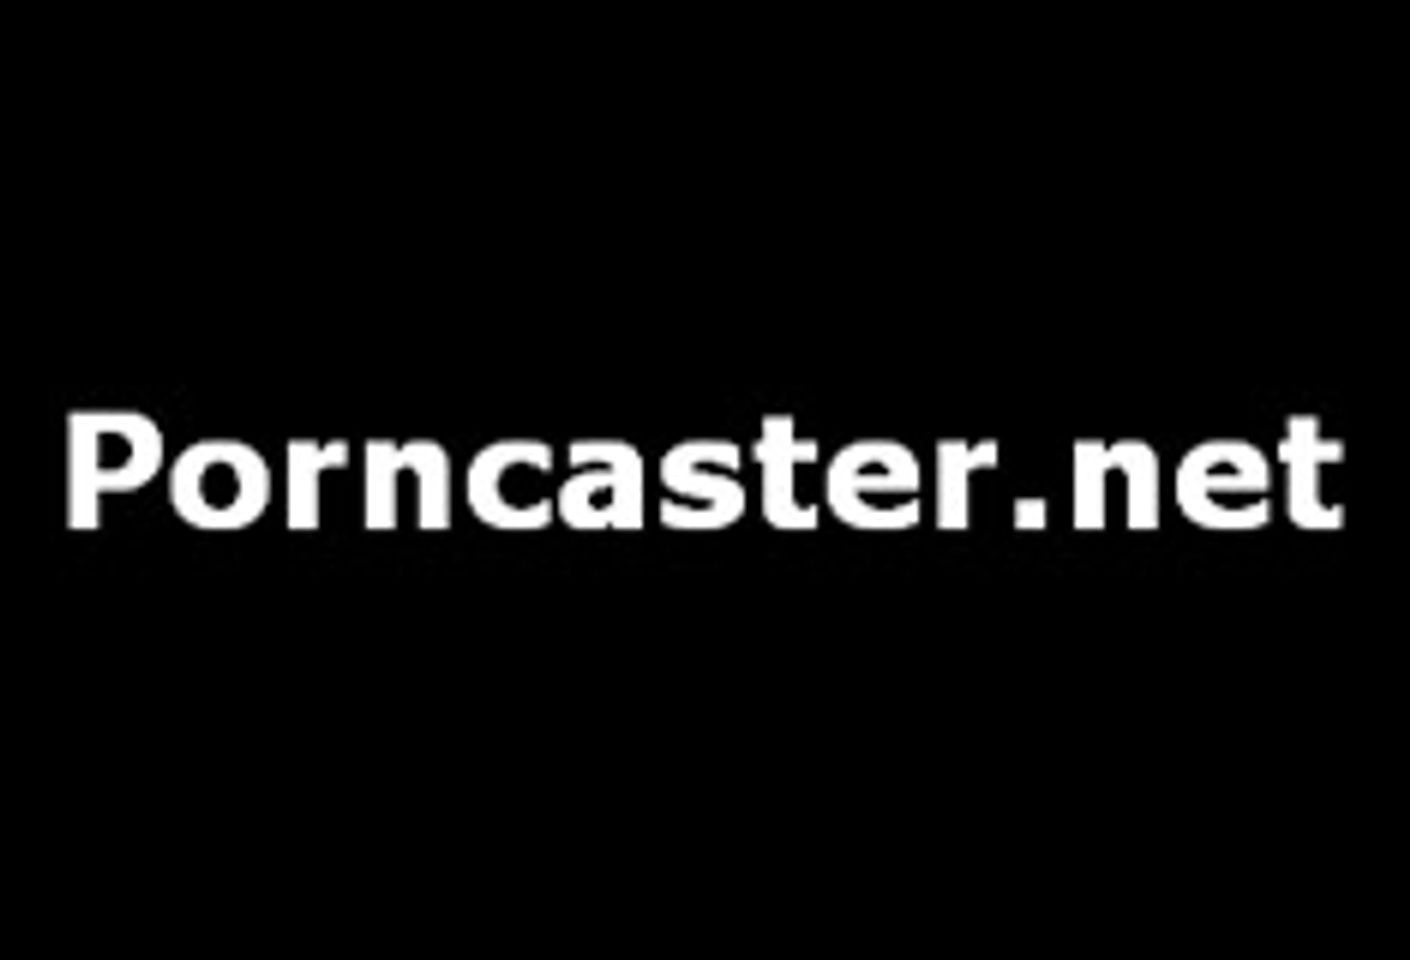 Porncaster.net Begins Podcasting Video Content